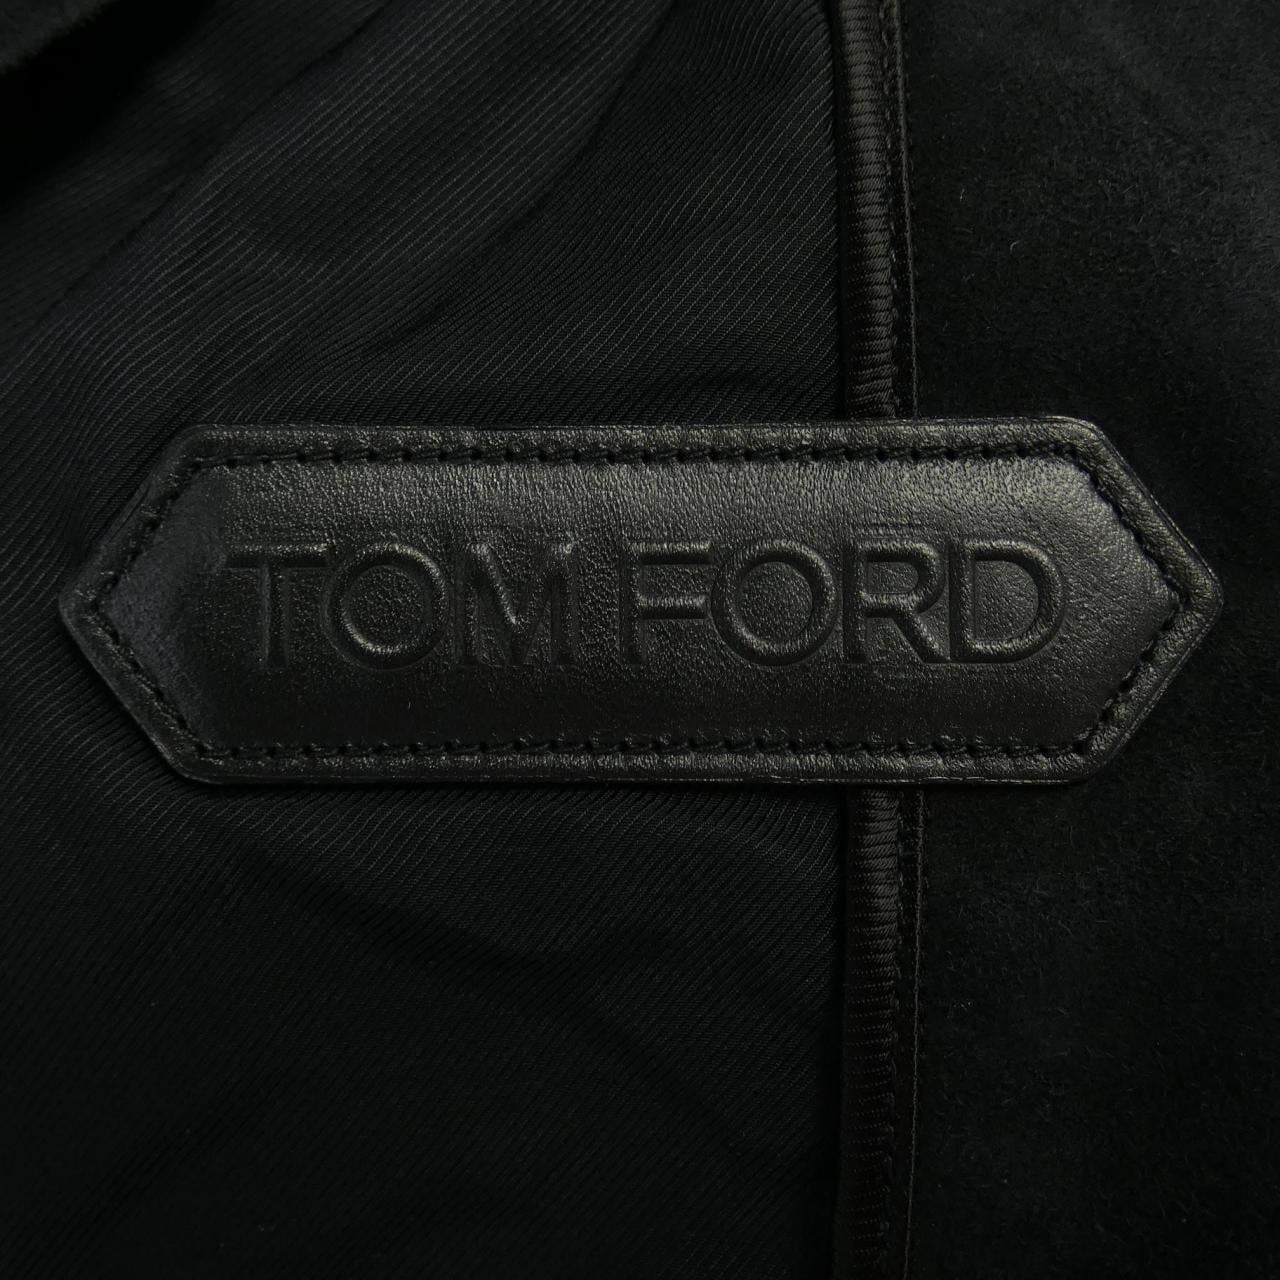 TOM FORD汤姆·福特 皮夹克